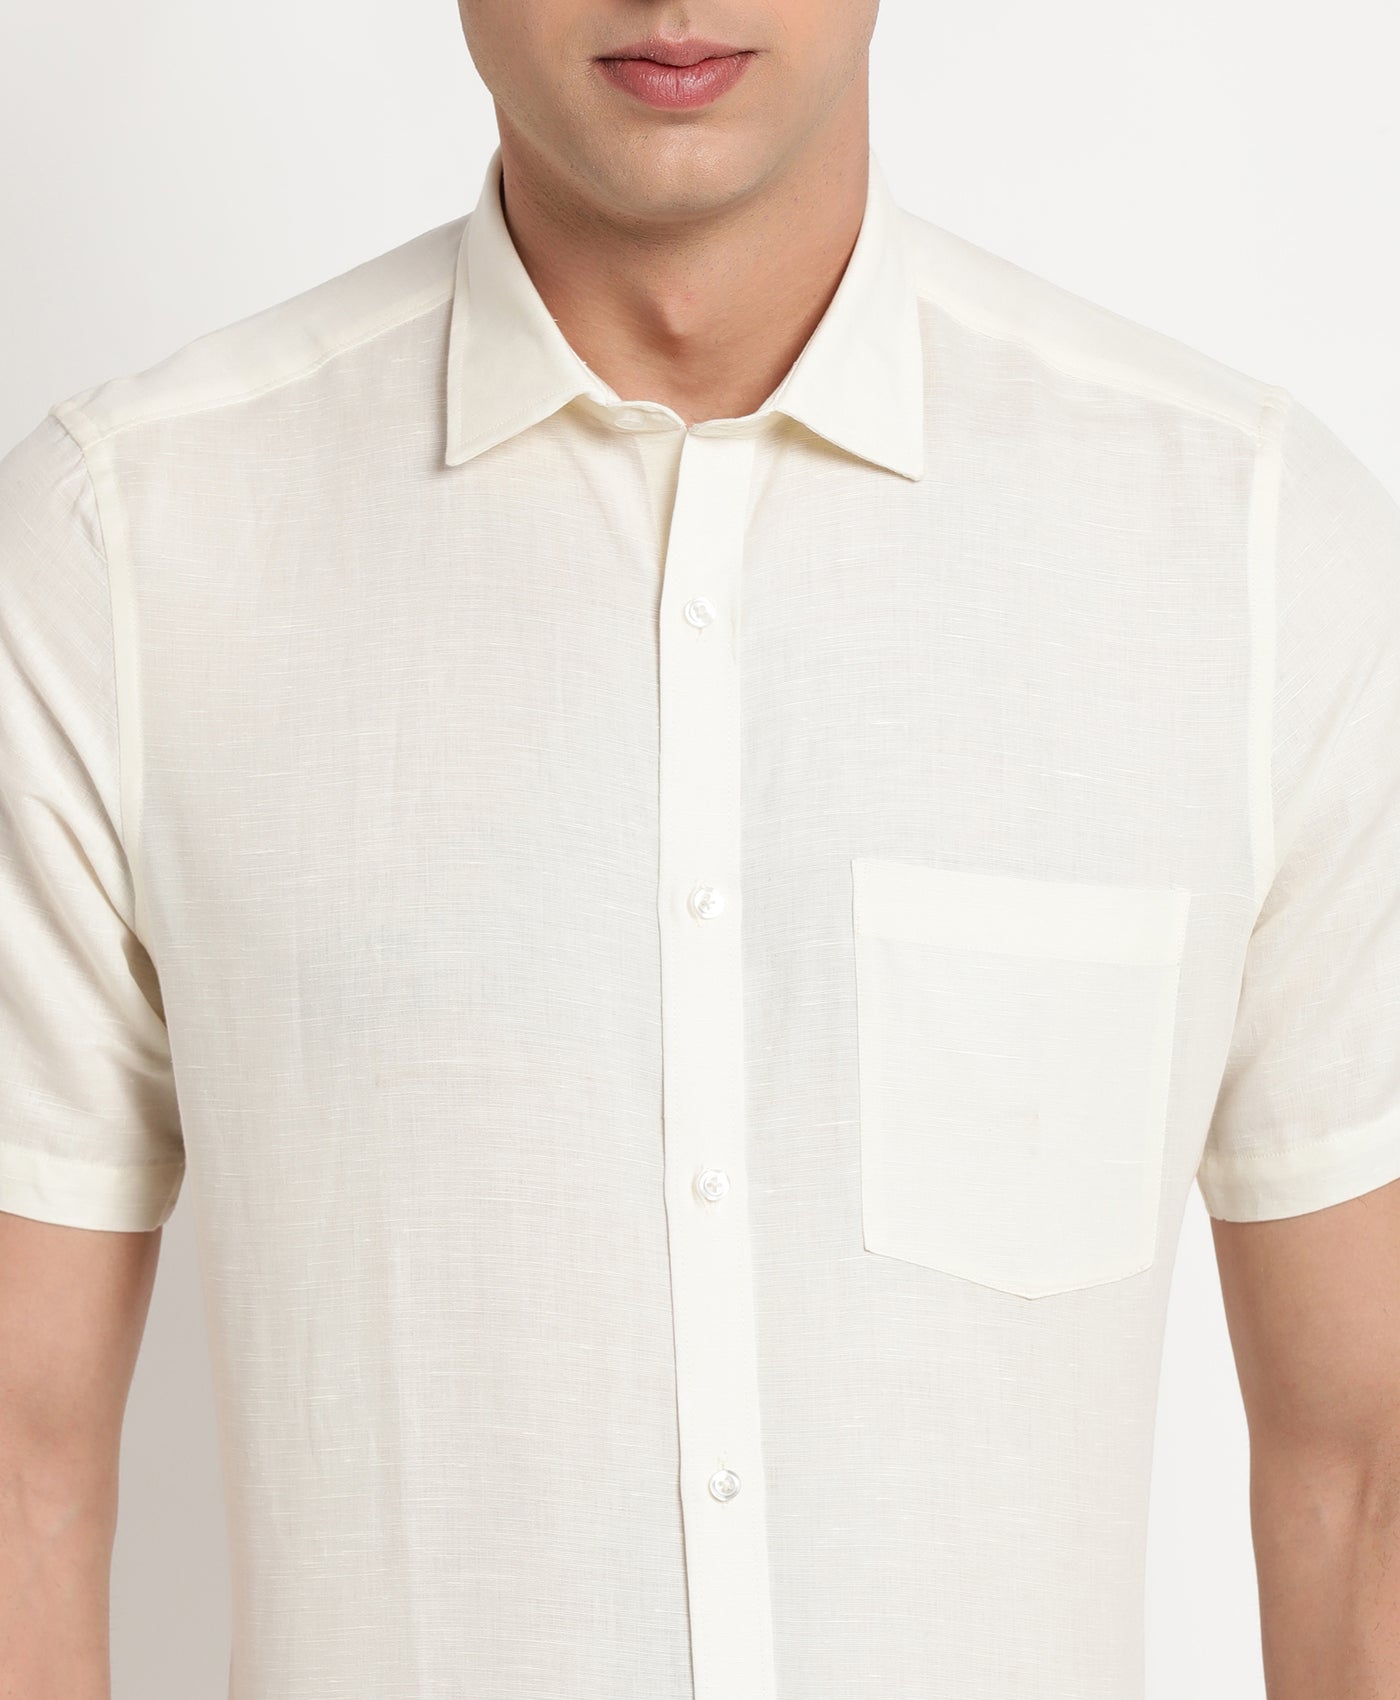 Cotton Linen White Plain Regular Fit Half Sleeve Formal Shirt